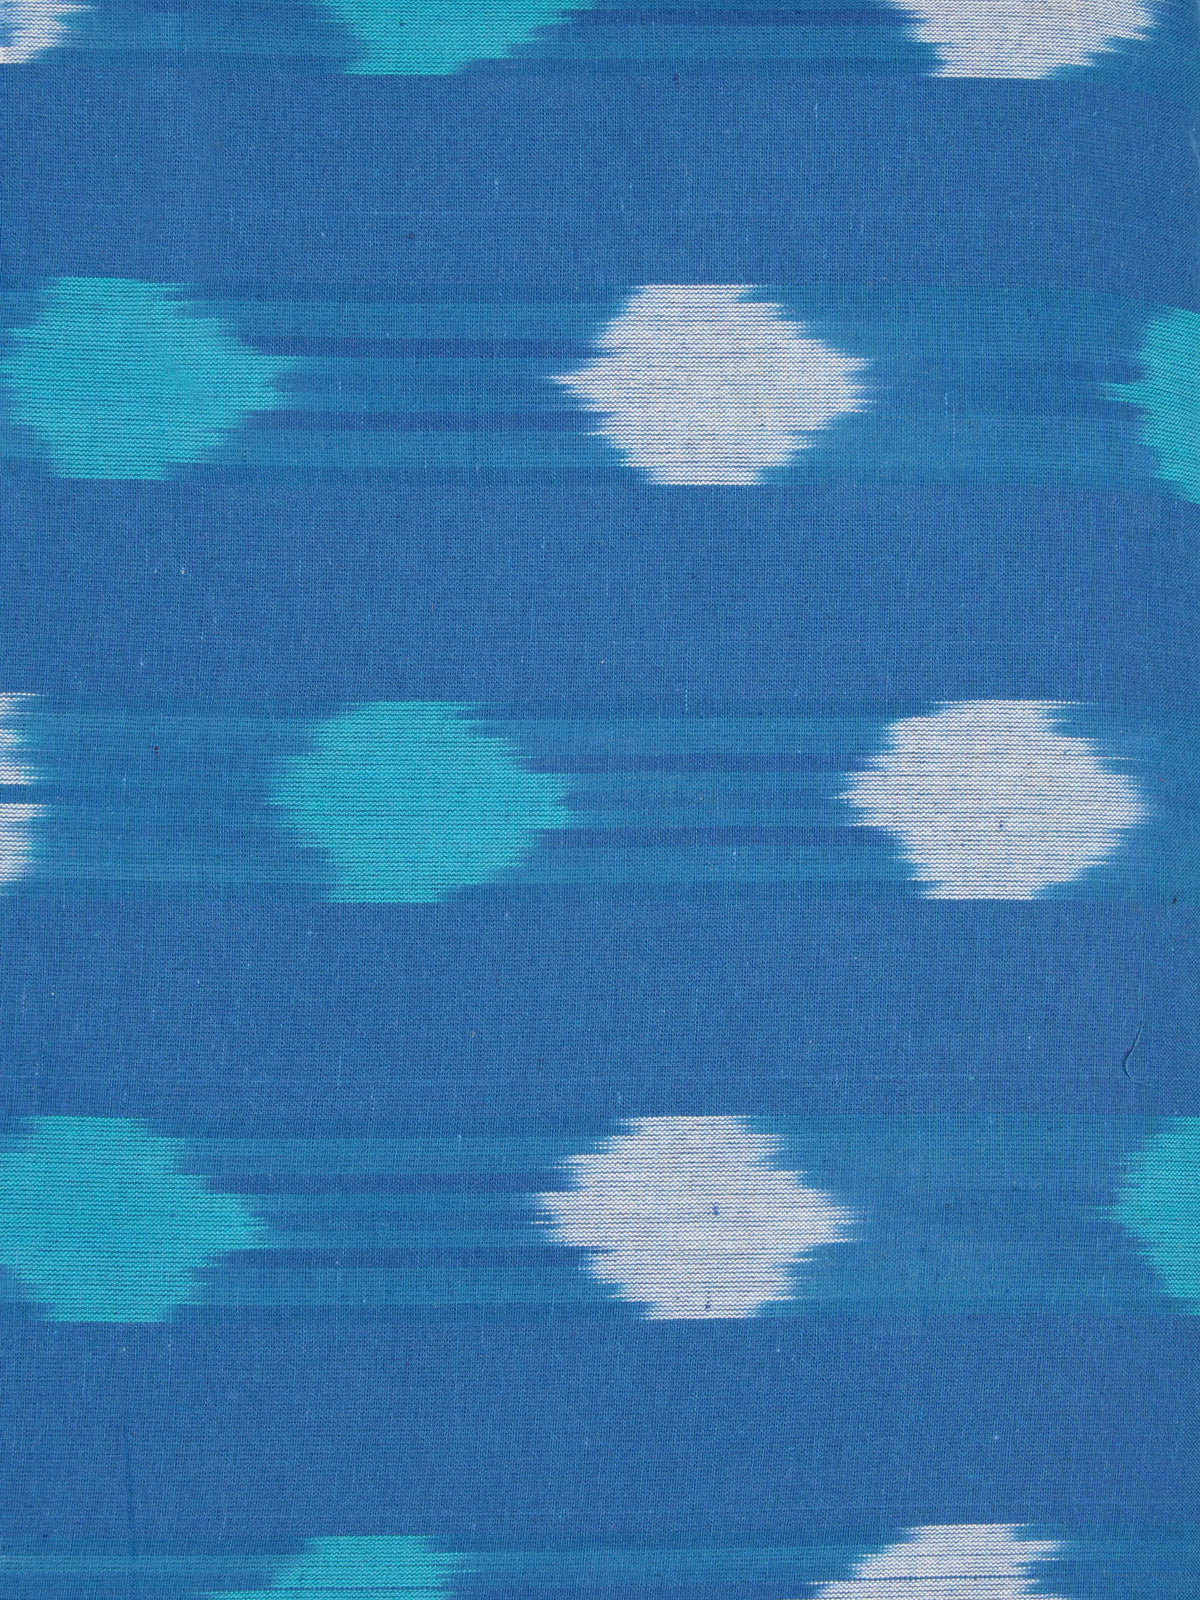 Sky Blue Ivory Hand Woven Ikat Handloom Cotton Fabric Per Meter - F002F2436